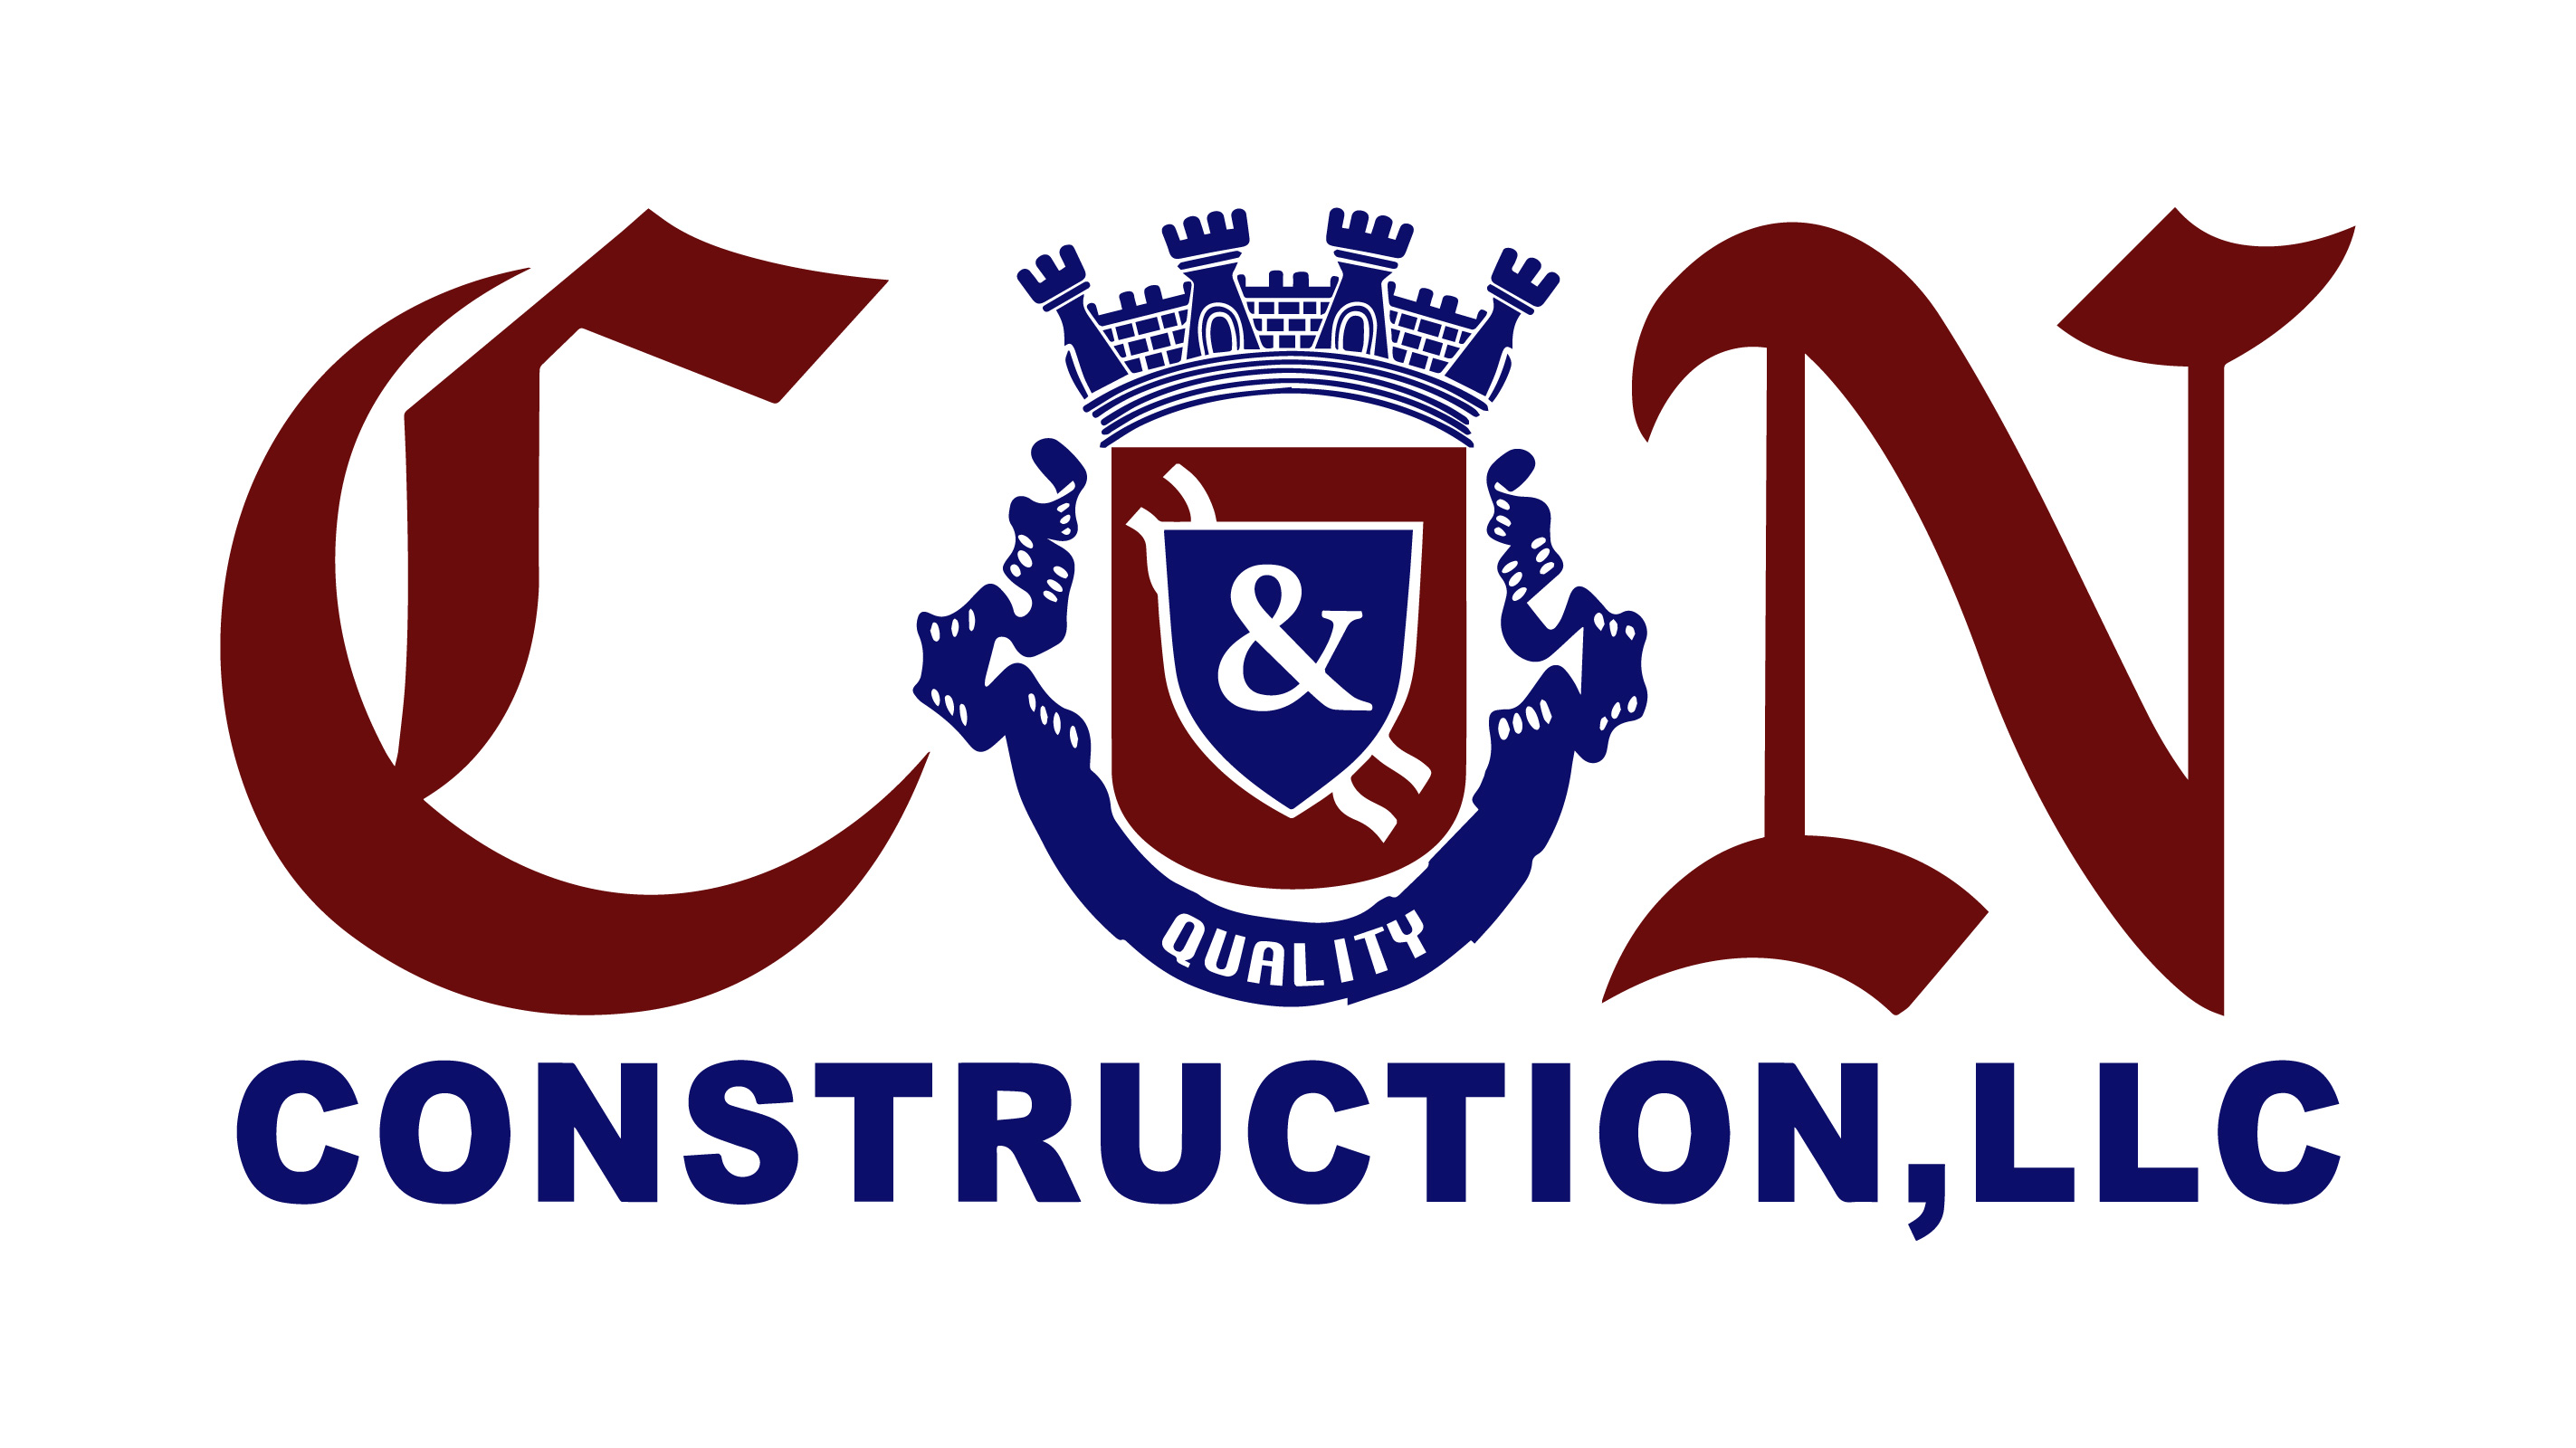 C&N Construction, LLC Logo